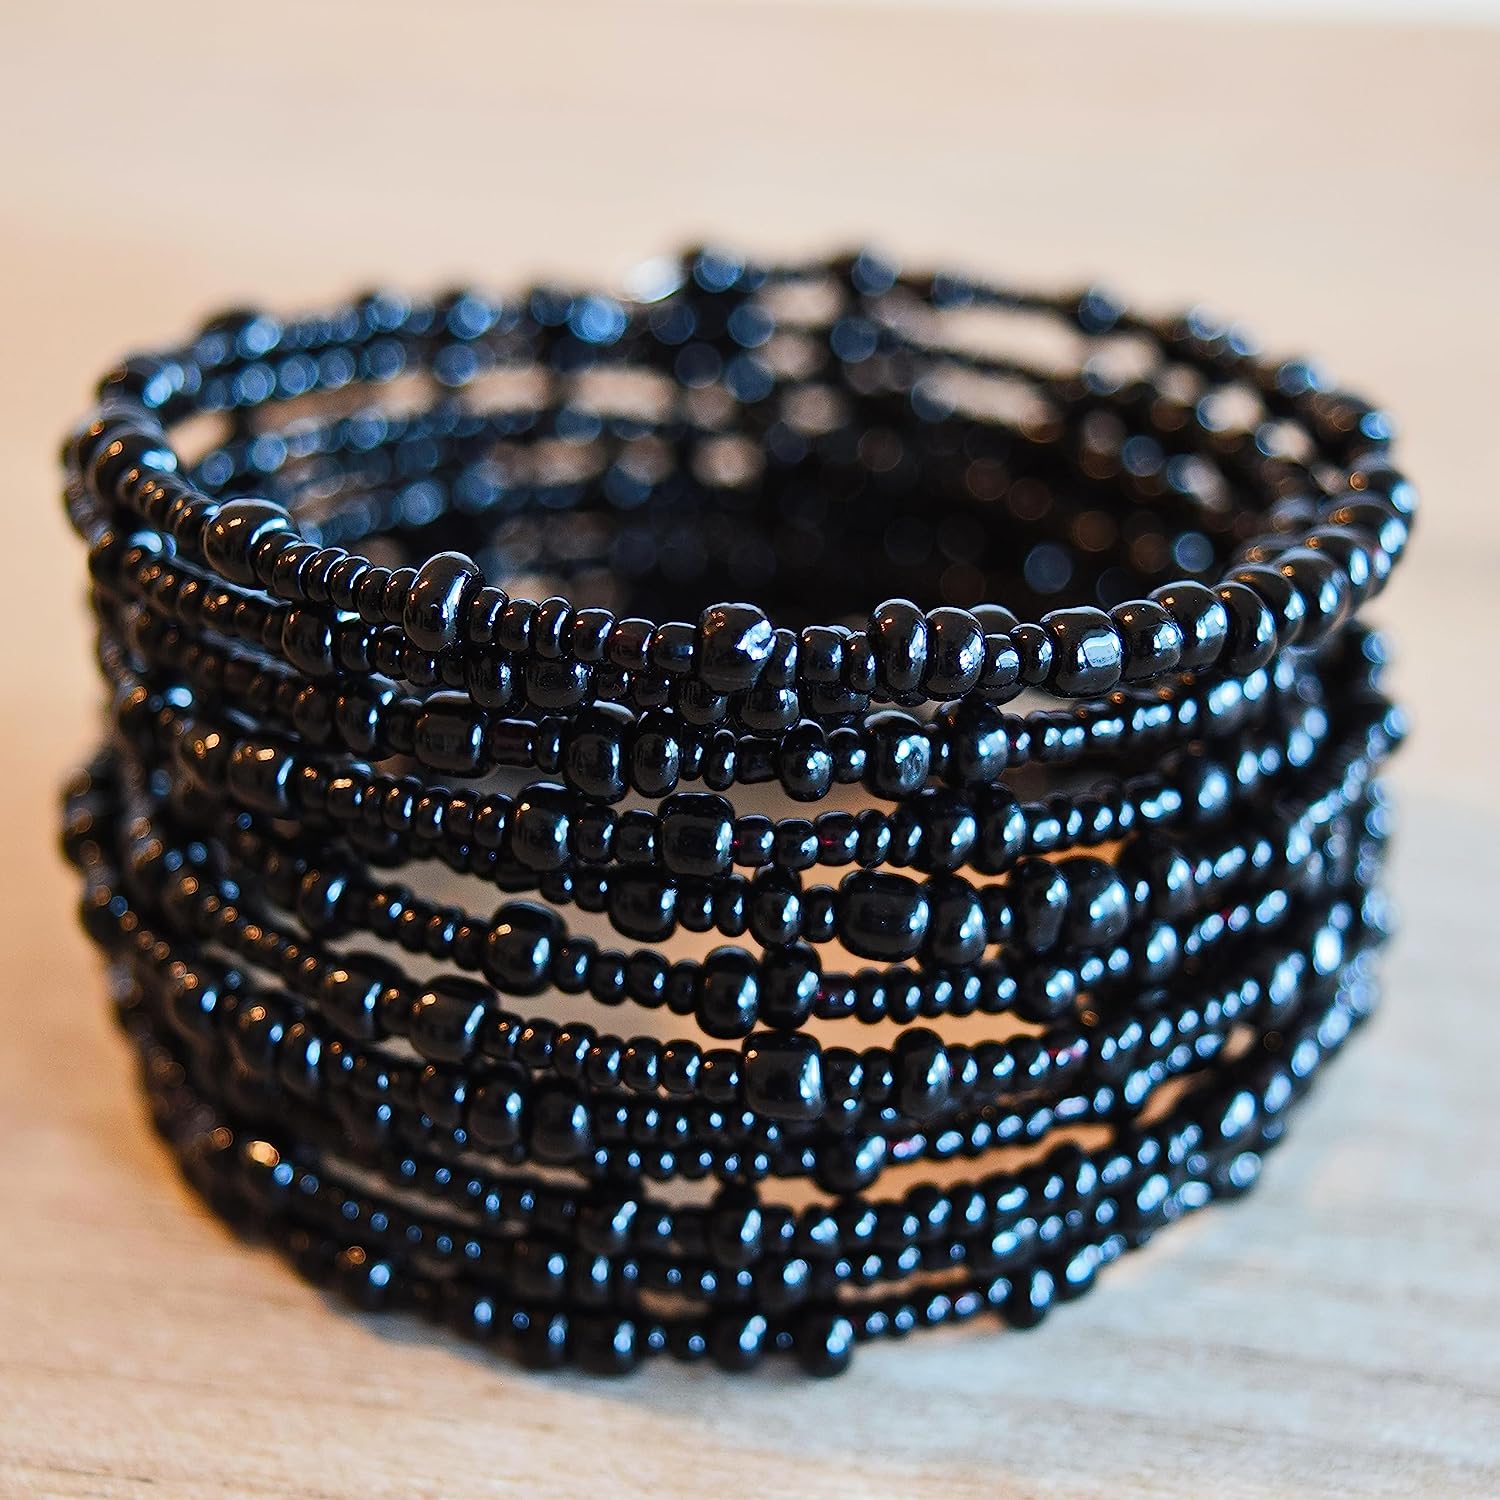 HANDMADE from AFRICA - SET OF 2 HANDMADE Bead Wrap Bracelets - made of 10 wire loops each - Unique African Jewelry - Handmade in Kenya - Metallic|Bronze|Eggplant Purple|Berry Blue, Black, KB50